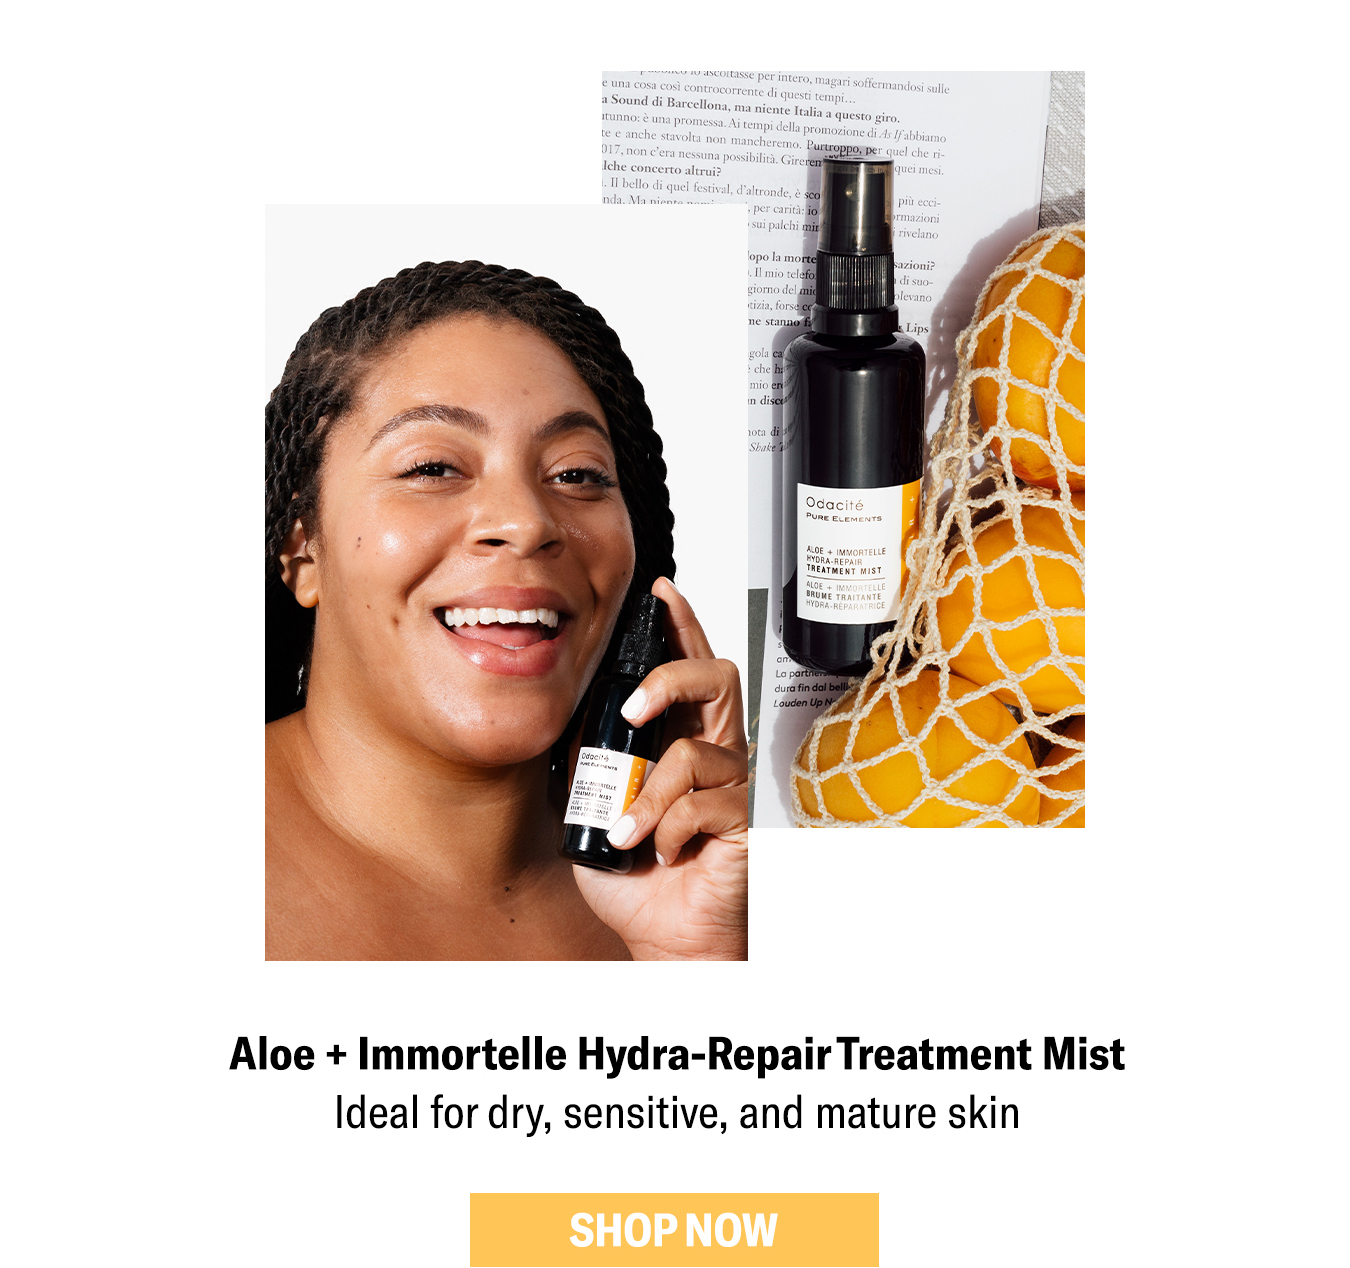 Aloe + Immortelle Hydra-Repair Treatment Mist